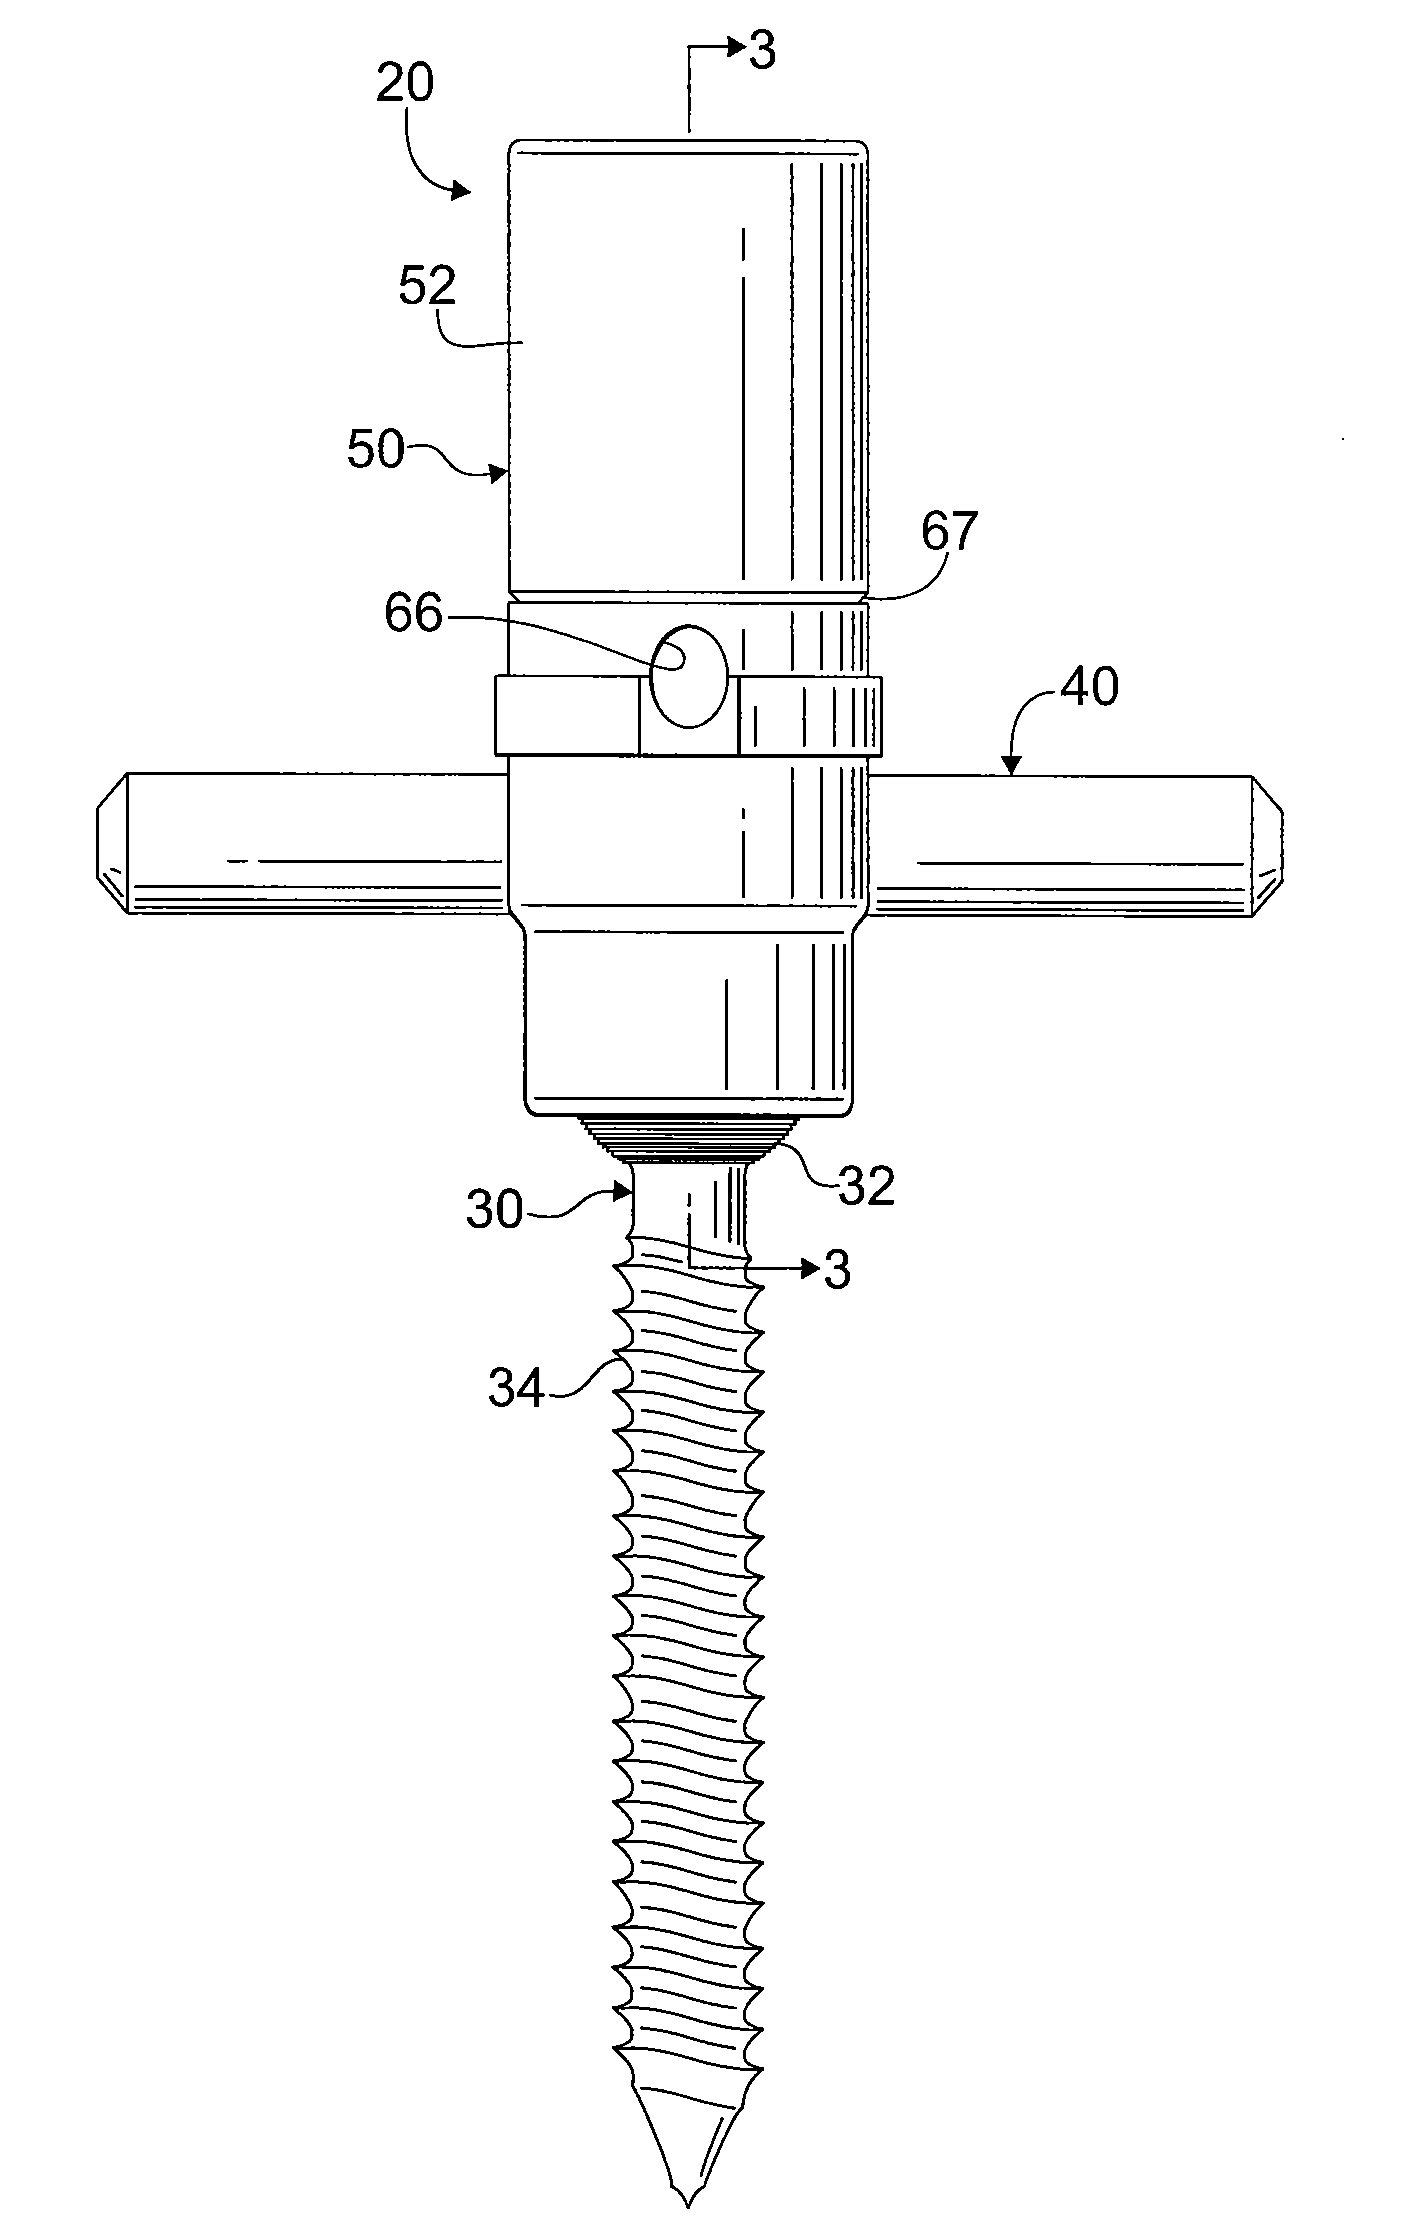 Pedicle screw fixation system